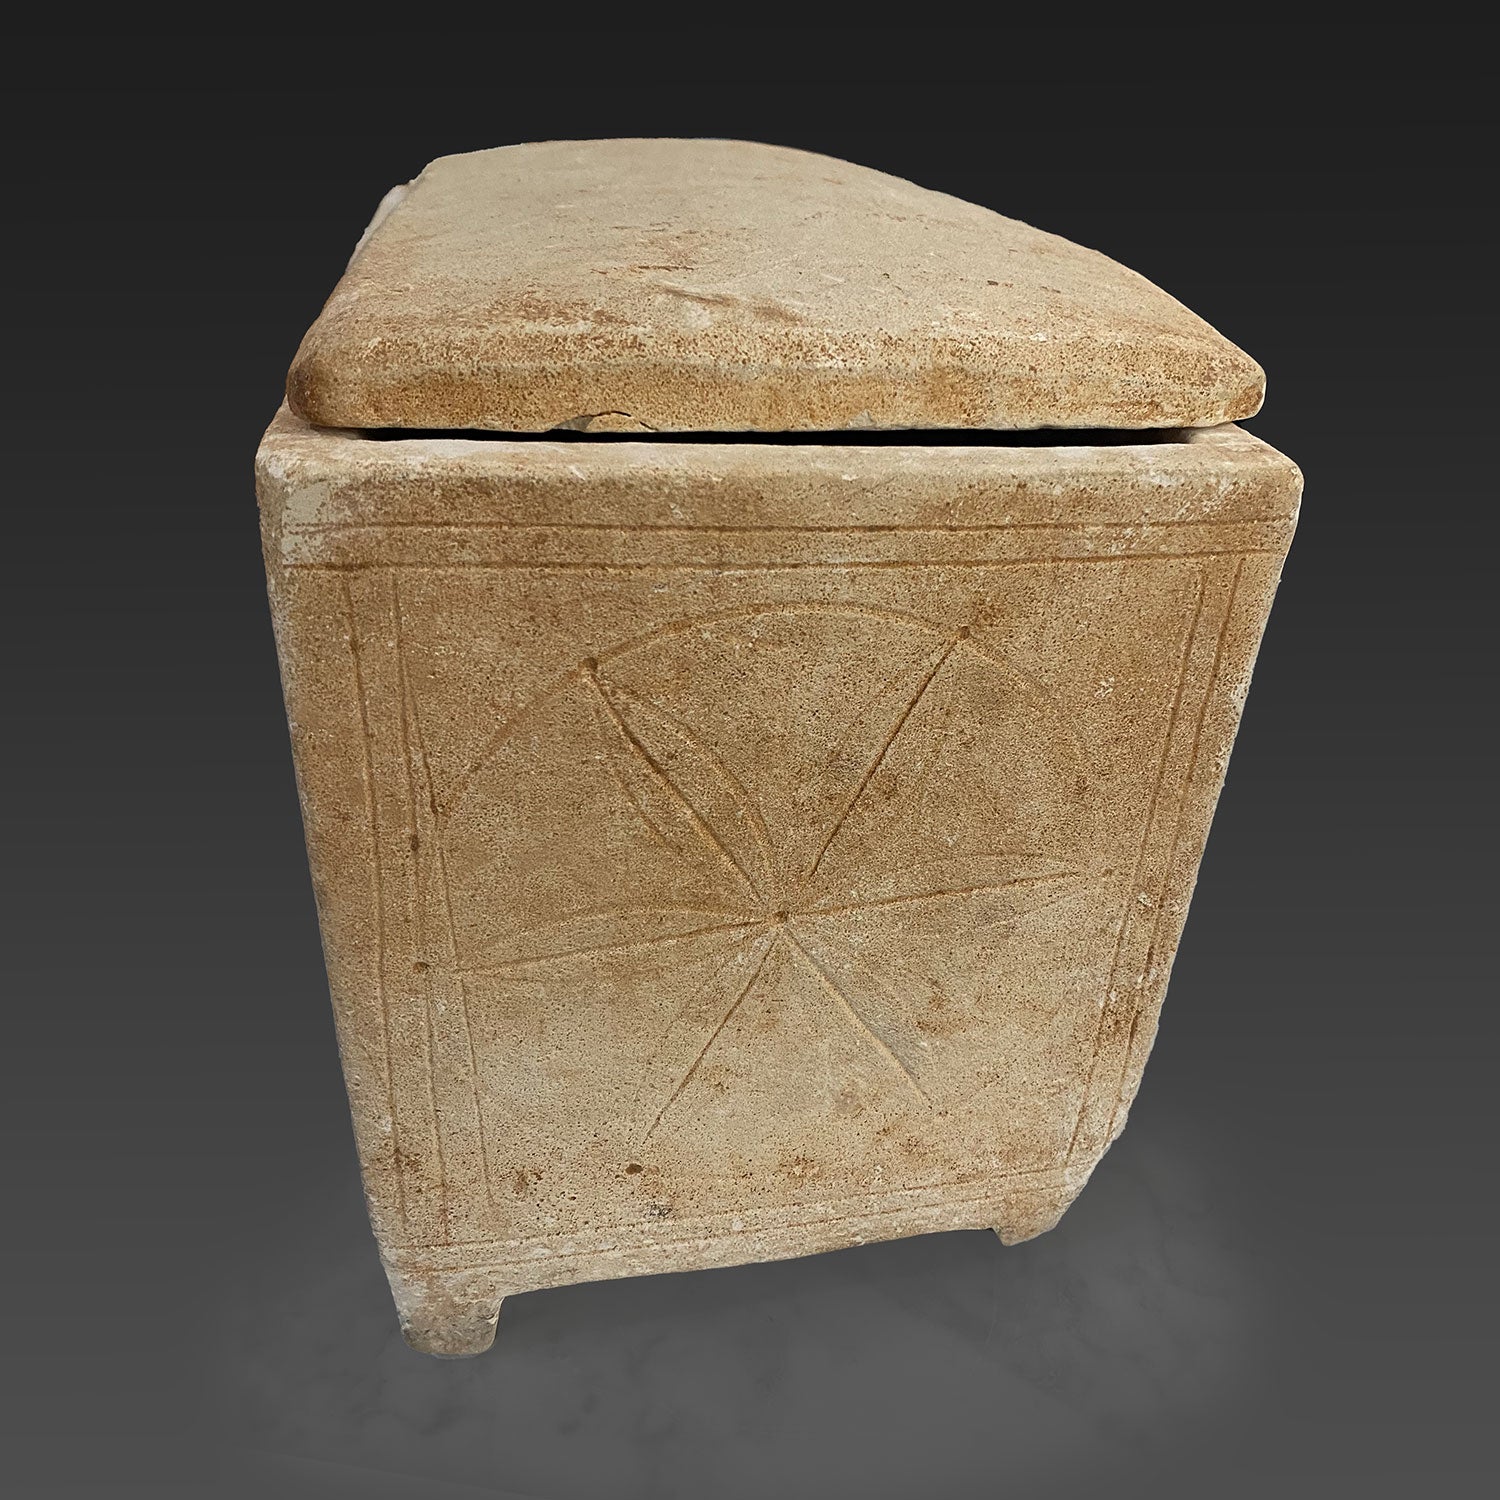 An early Jewish Limestone Ossuary with Lid, ca. 1st century BCE - 1st century CE